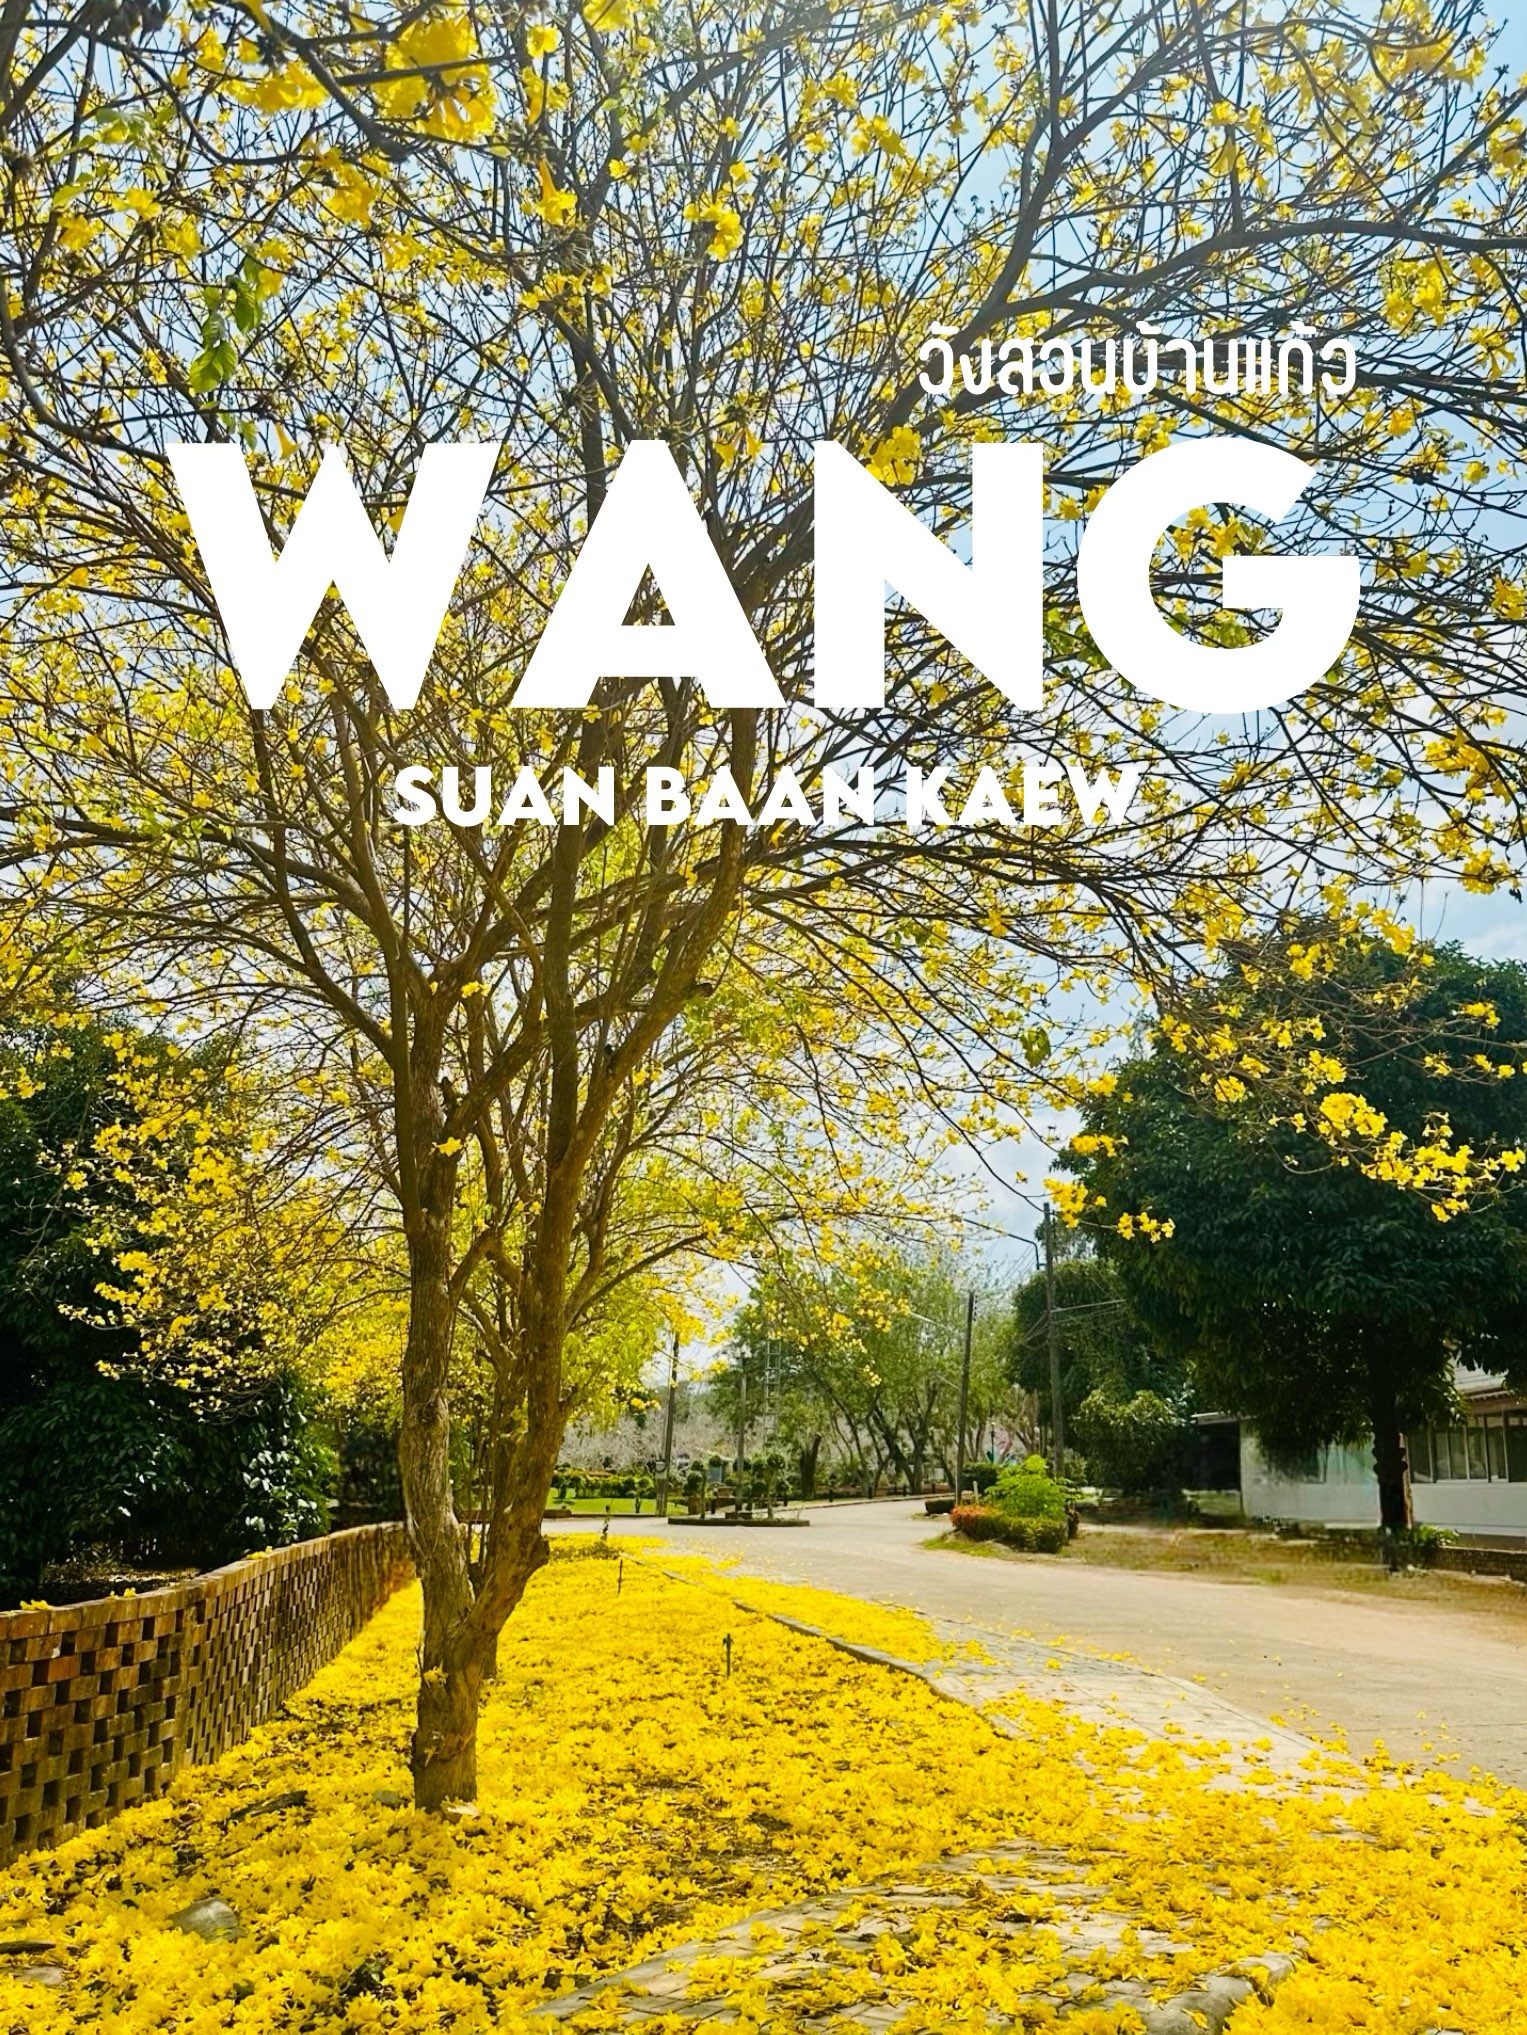 Wang Suan Ban Kaew 有印度黄色树的照片点🌼